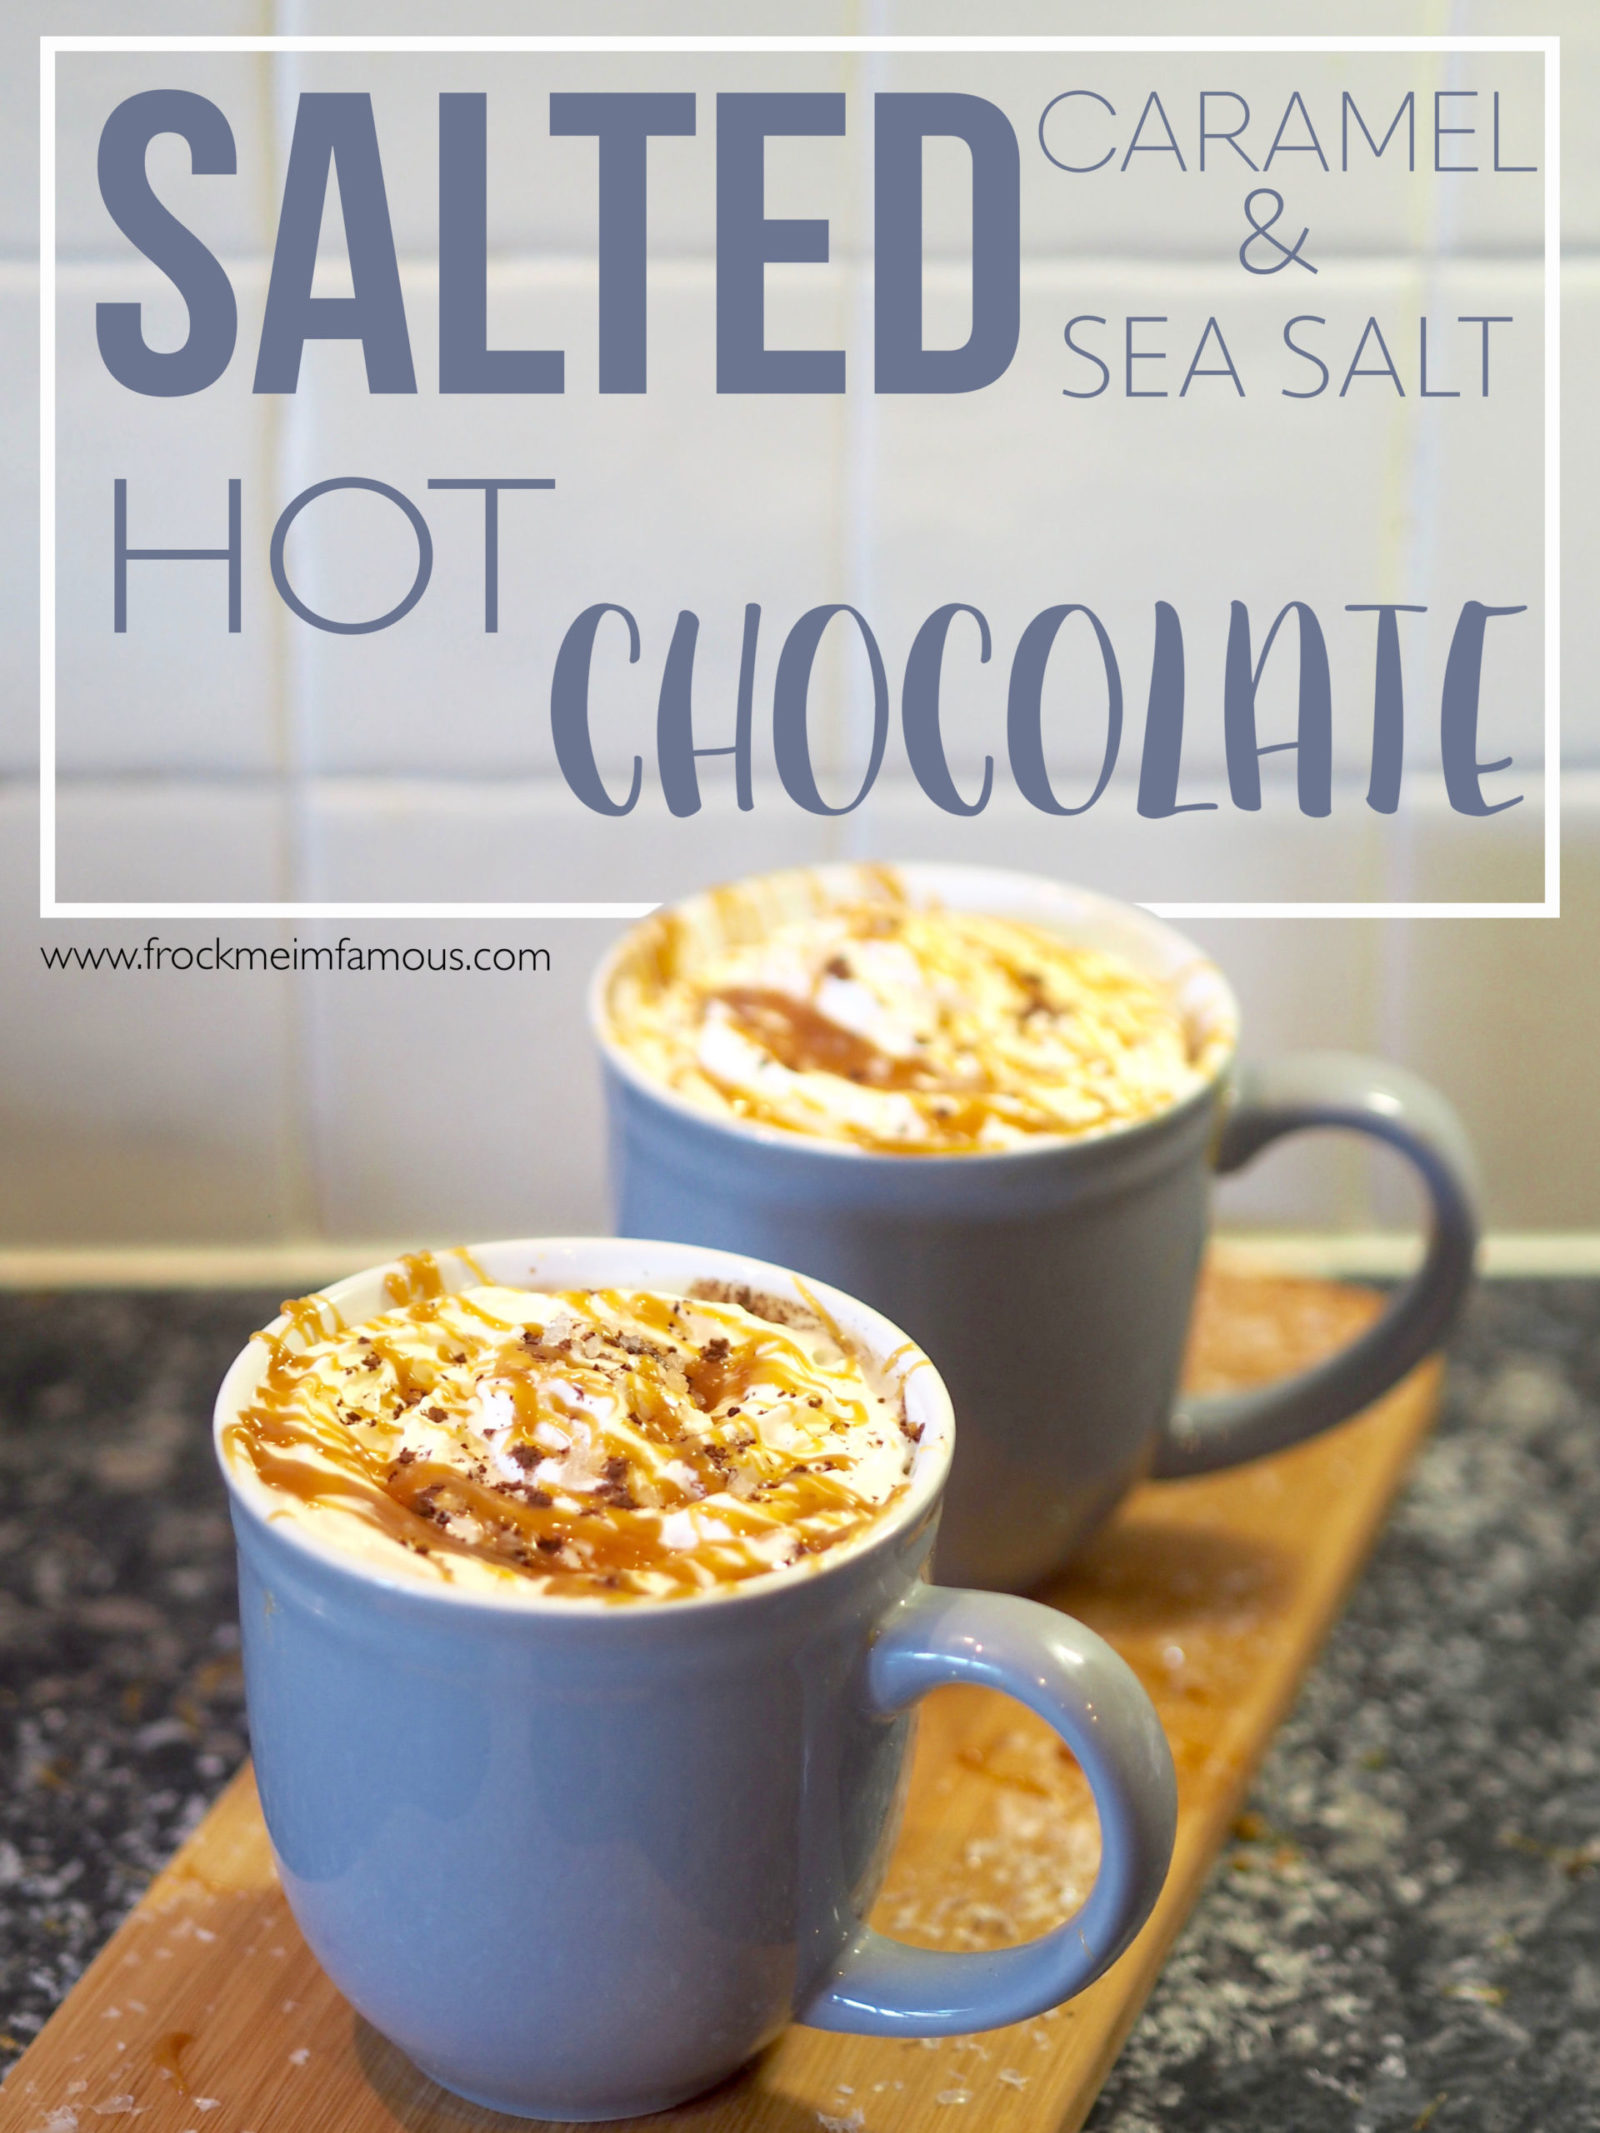 Salted Caramel & Sea Salt Hot Chocolate